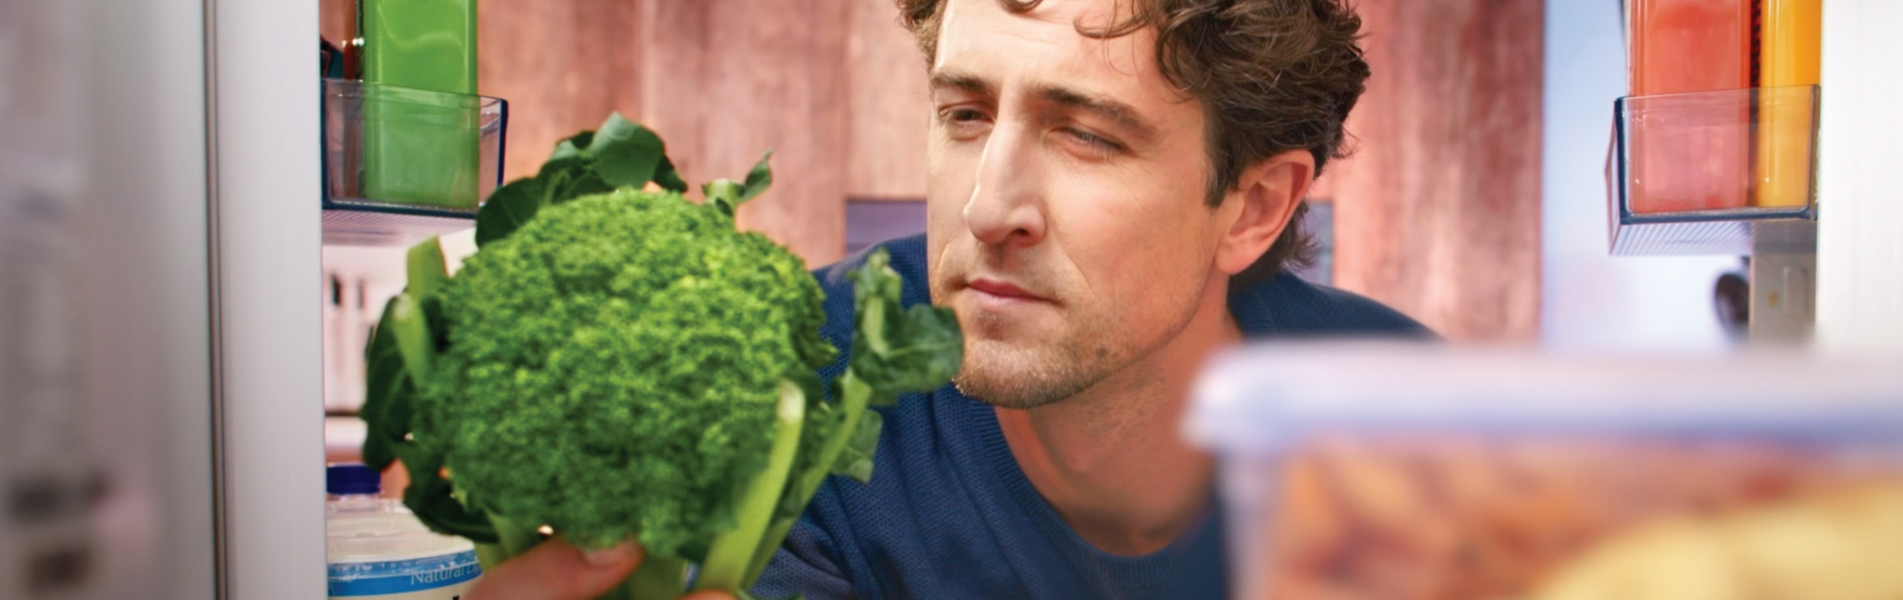 man holding a broccoli